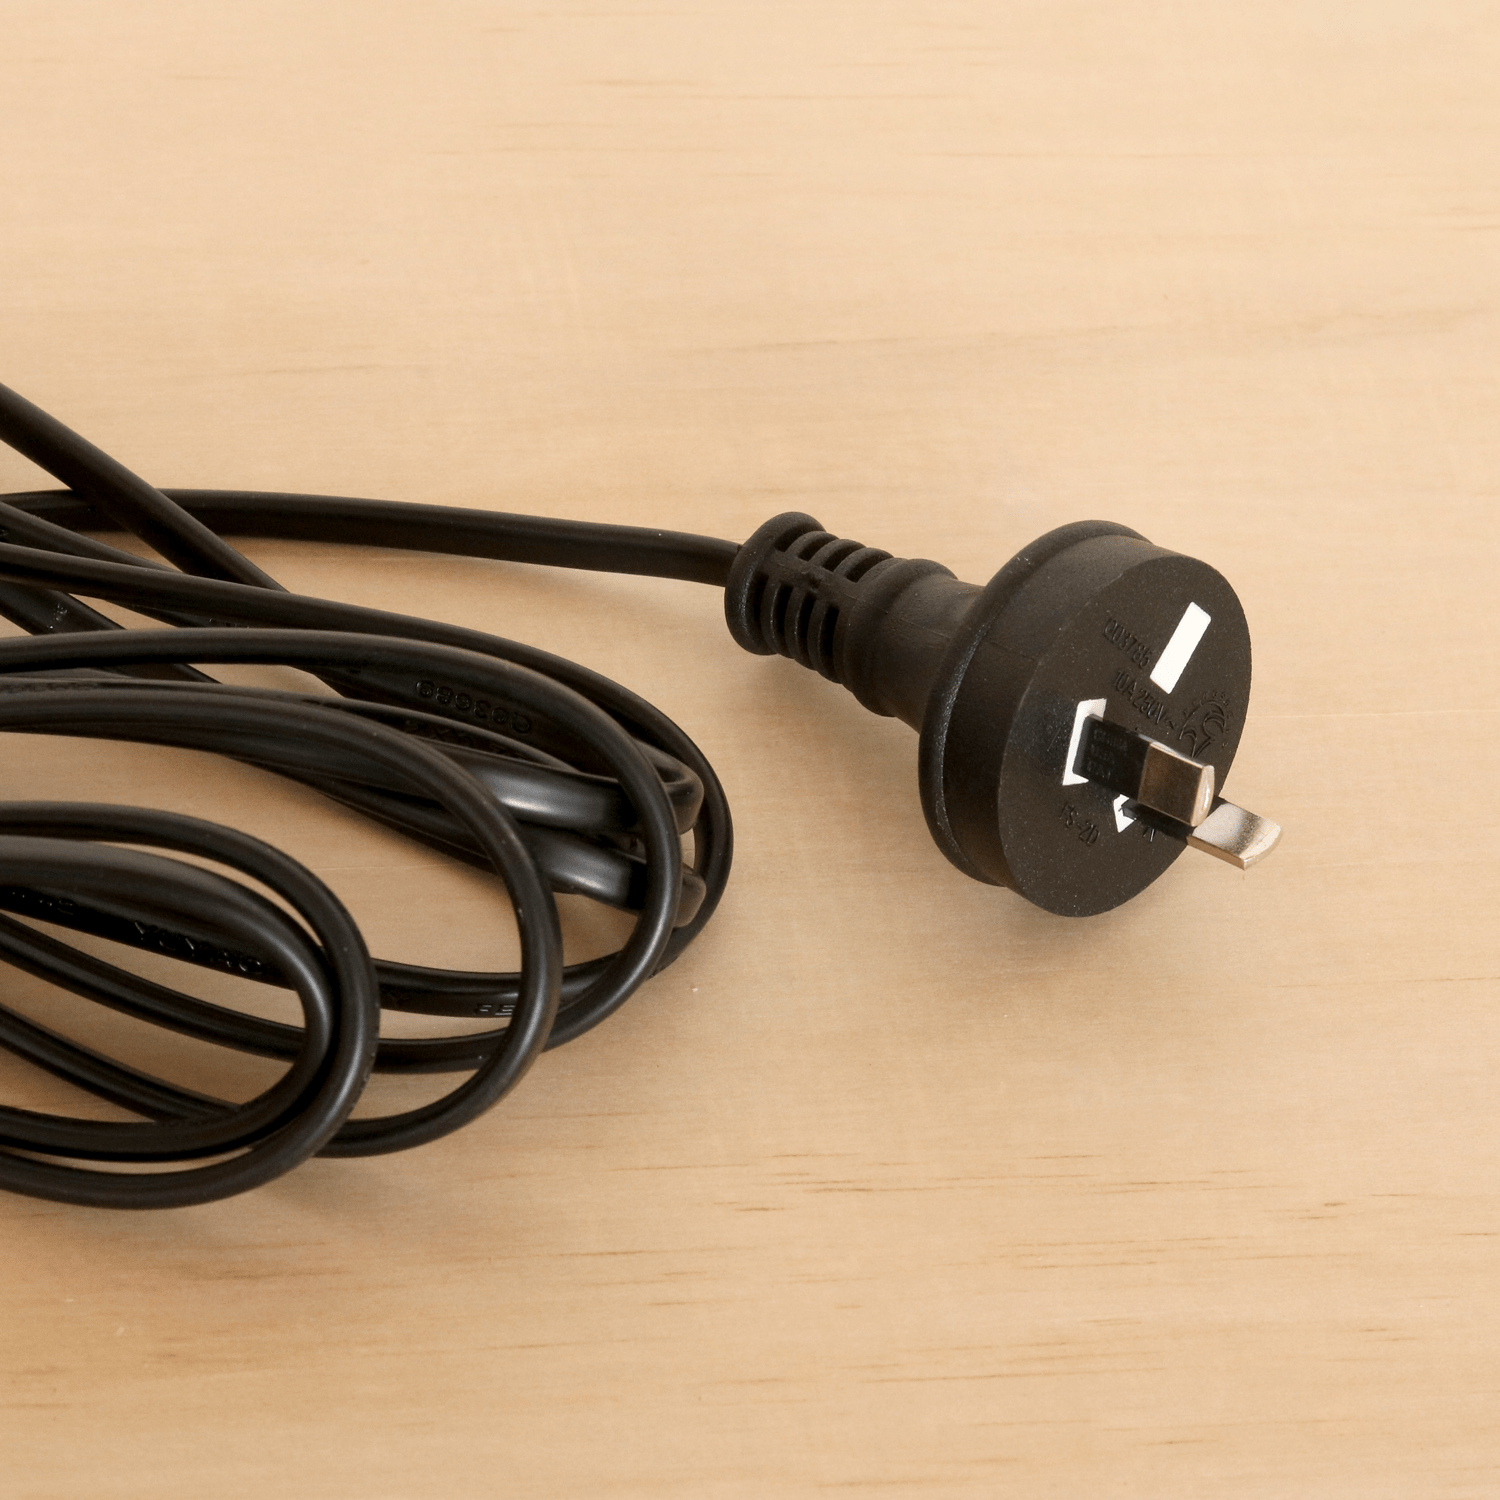 Australian cord and plug upgrade